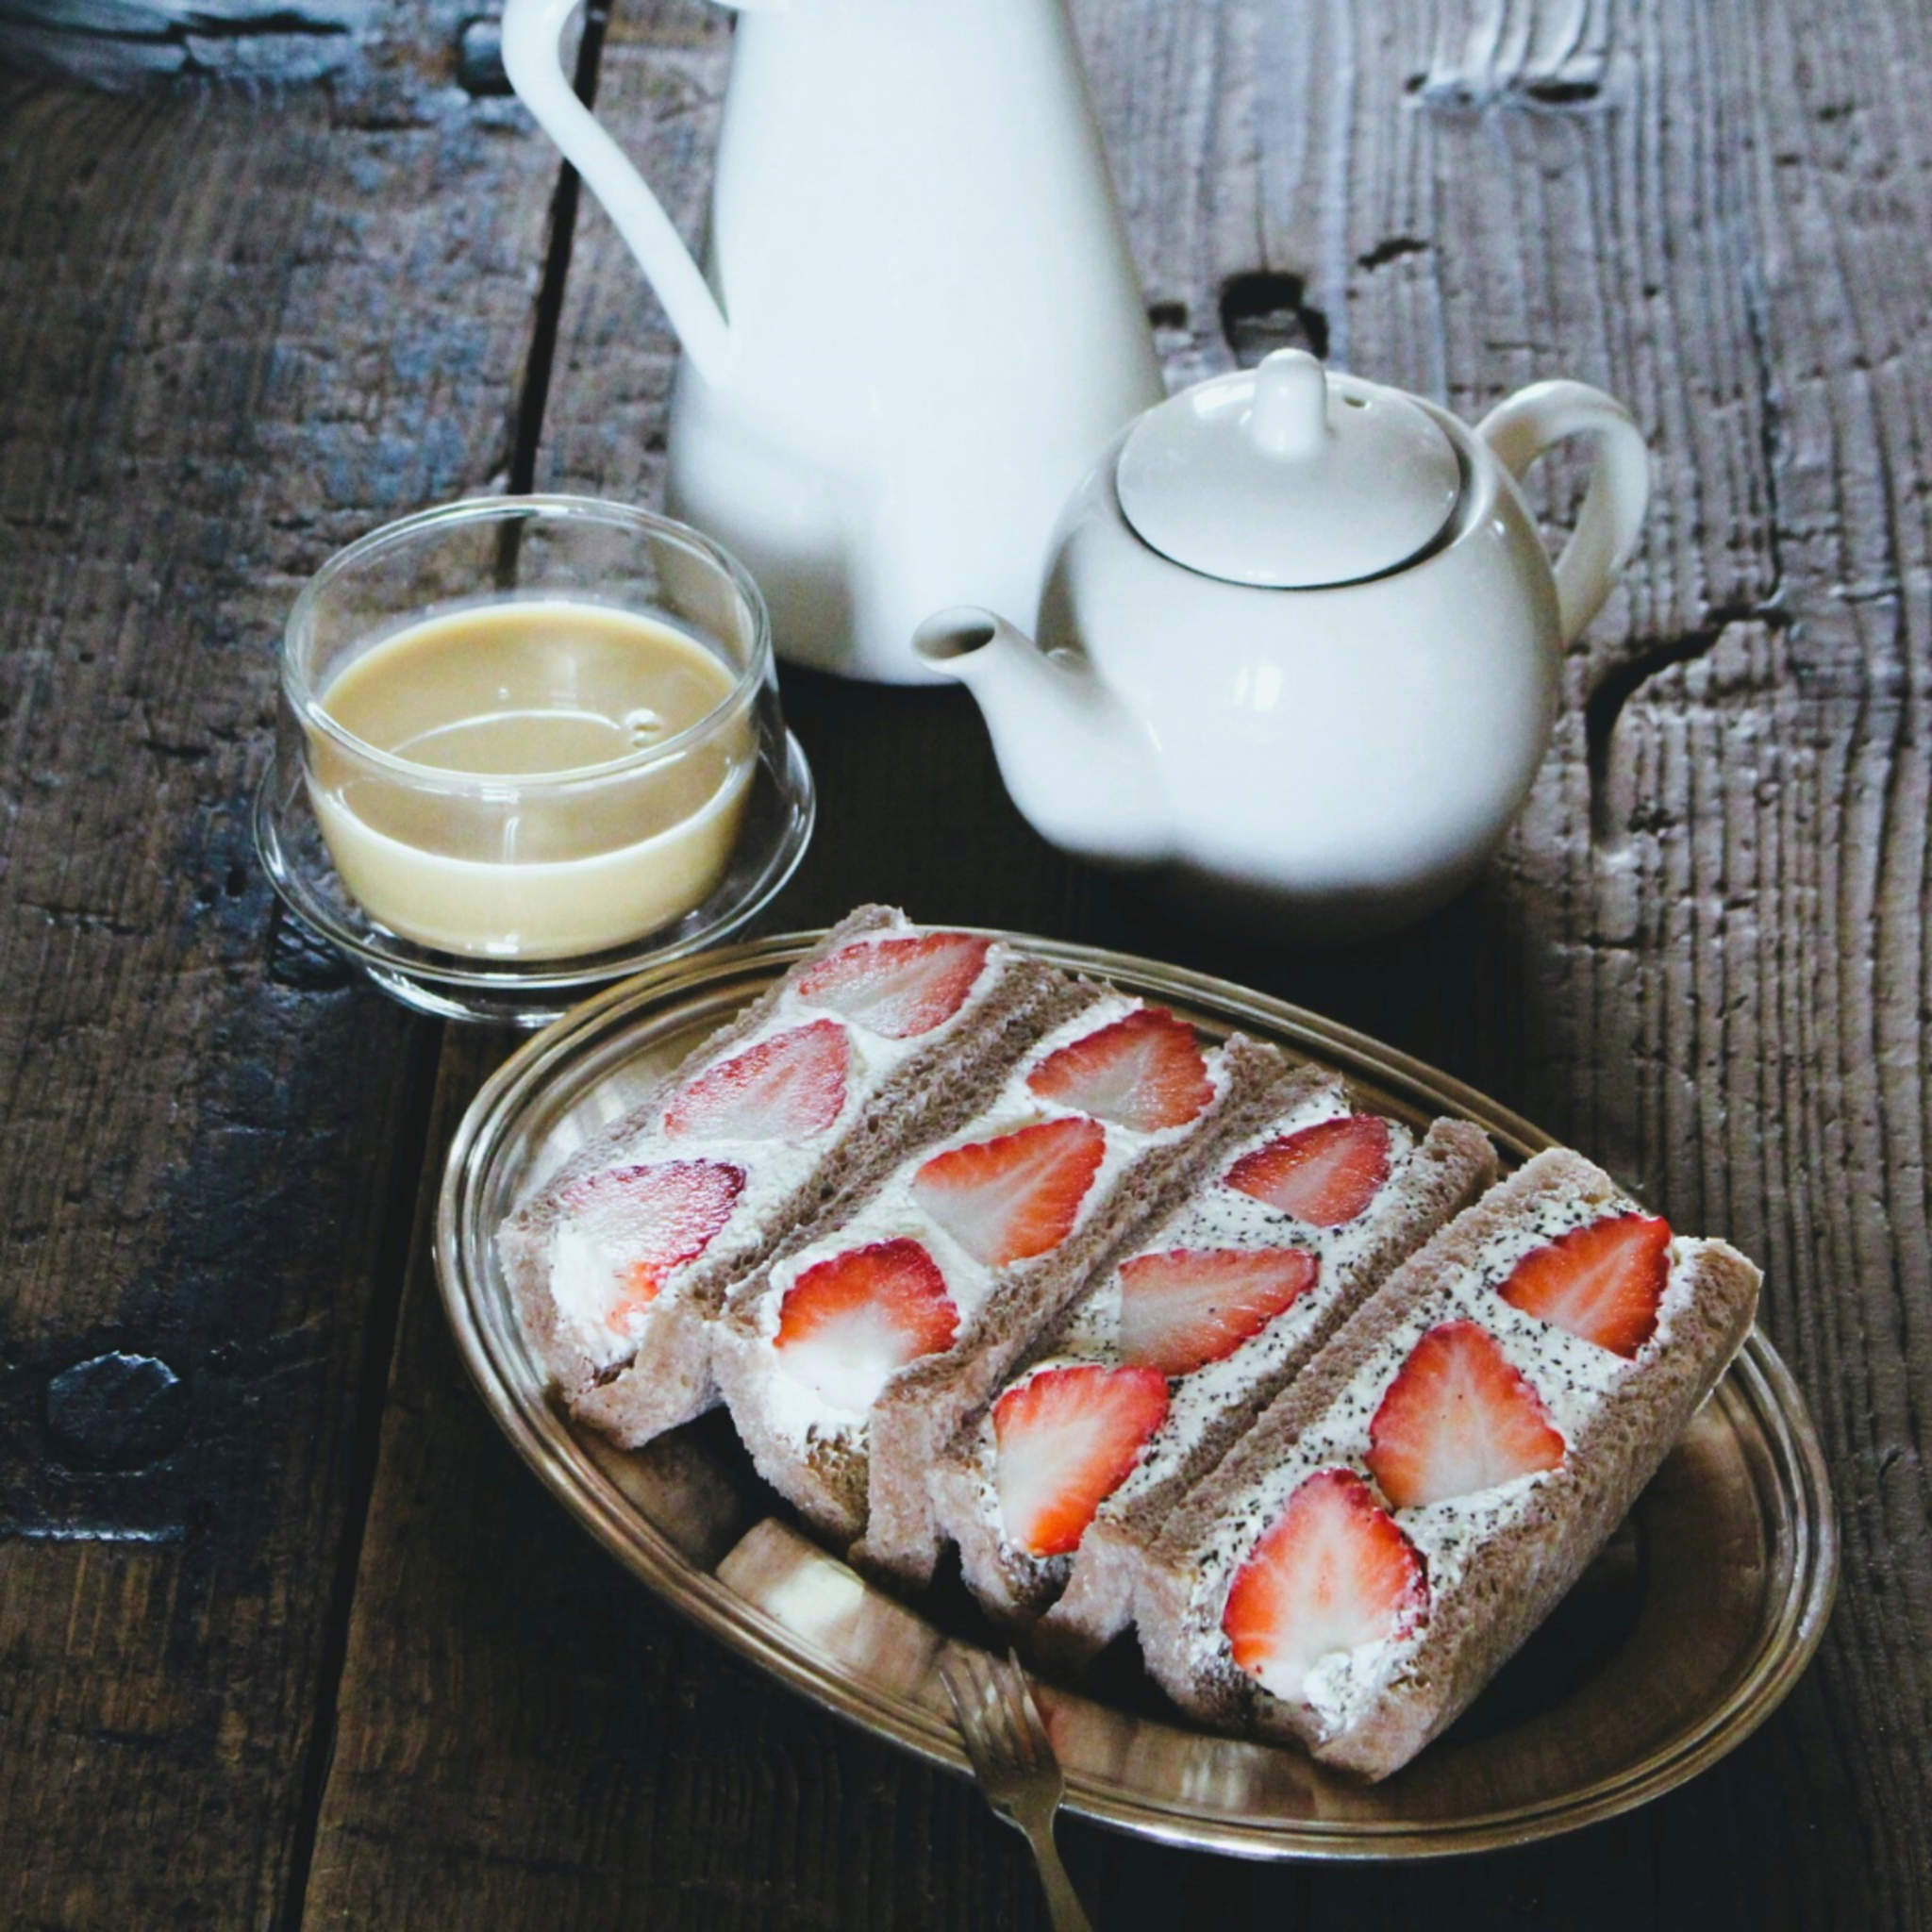 OHISAMAからのお知らせ(3月限定🌞「アールグレイ紅茶クリームのいちごサンド」🍓)に関する写真